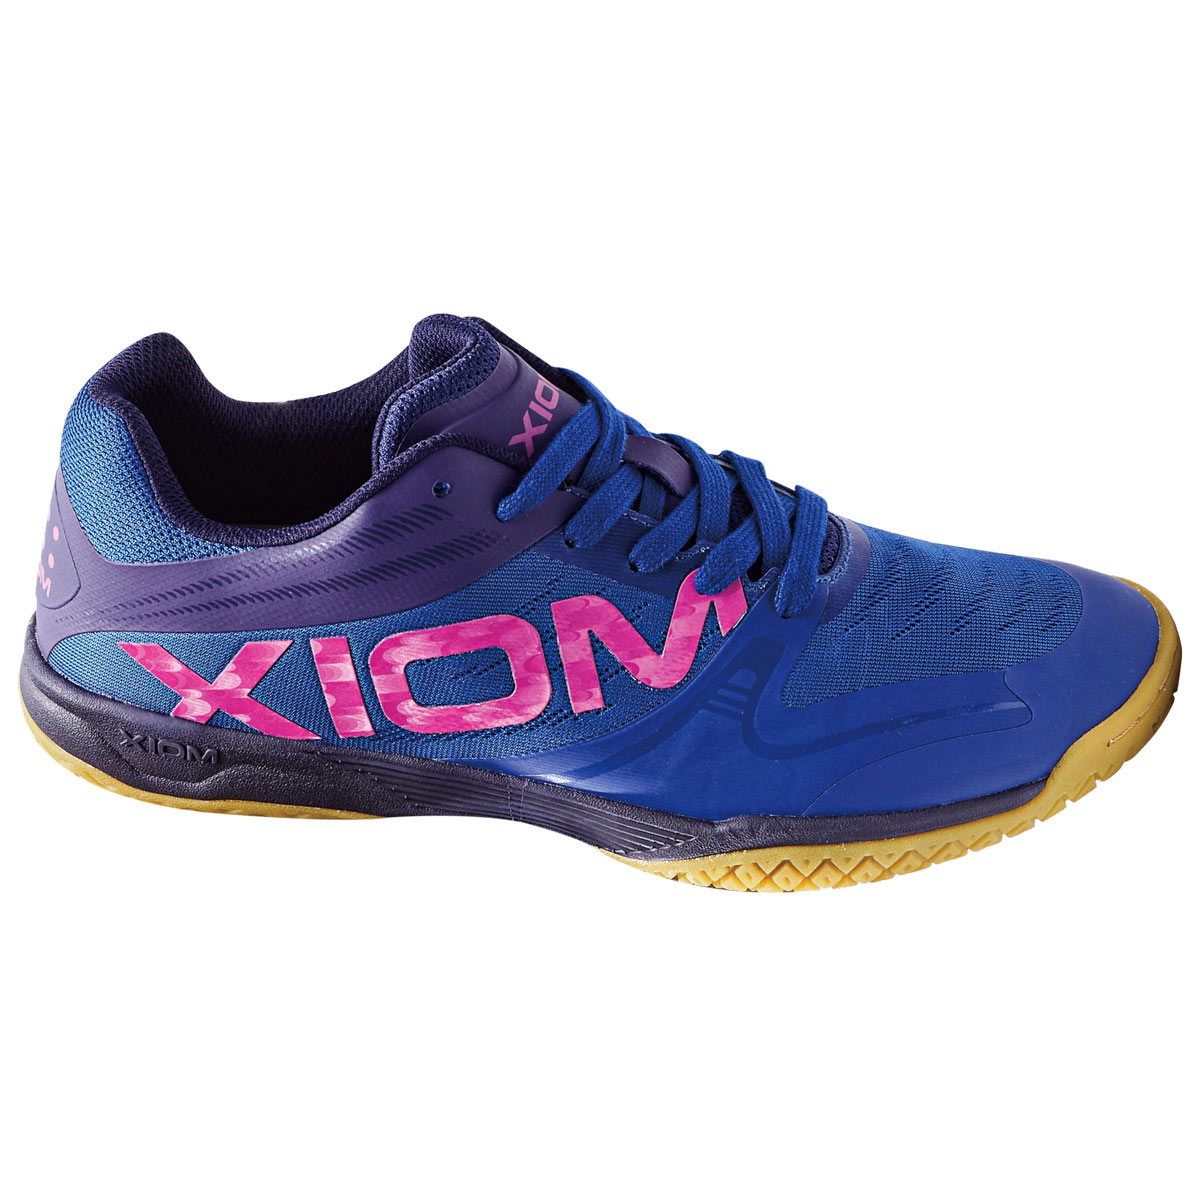 XIOM Shoe FT Igre blue 10,5